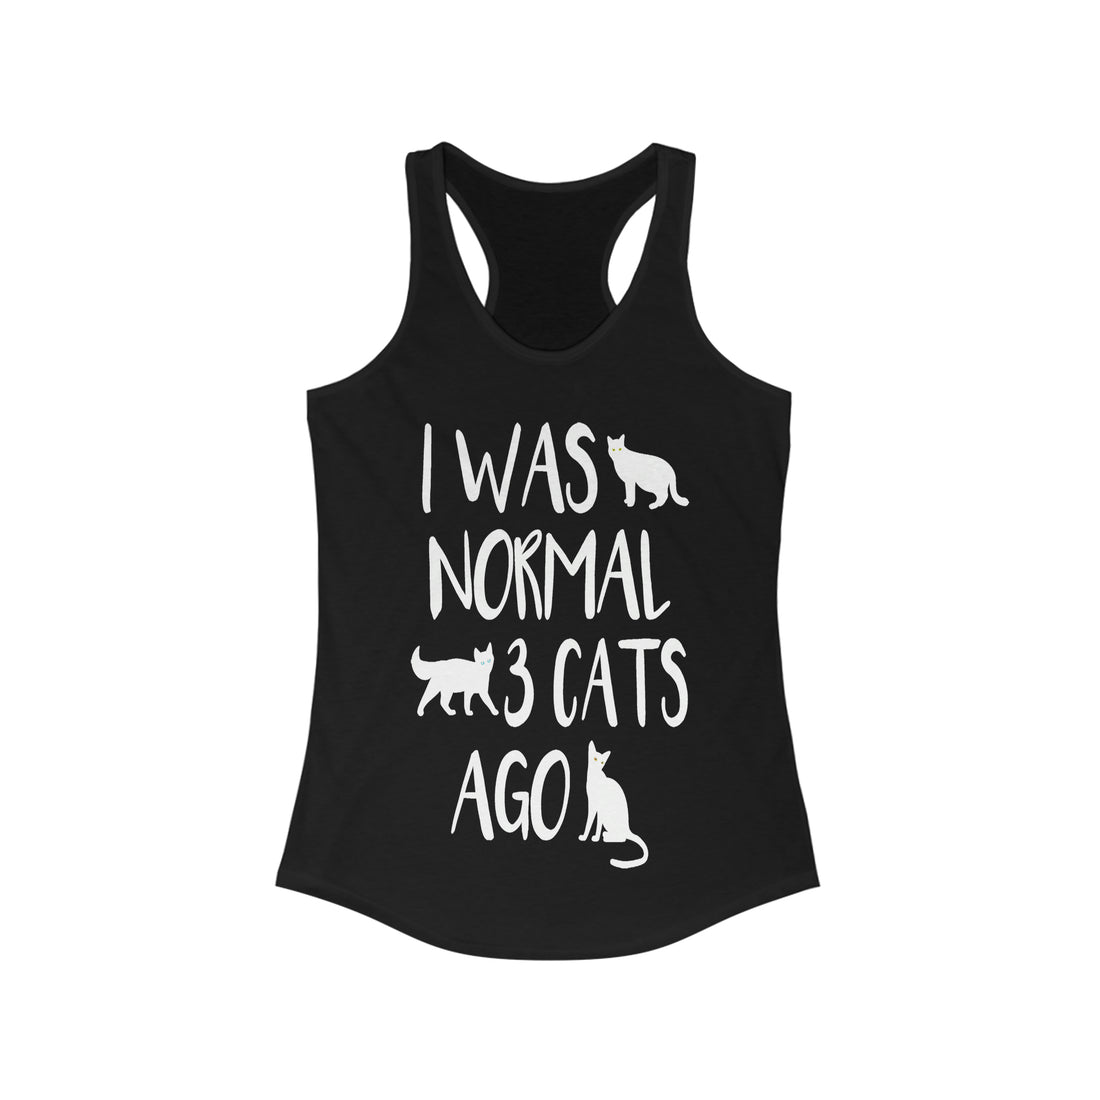 I Was Normal 3 Cats Ago - Racerback Tank Top